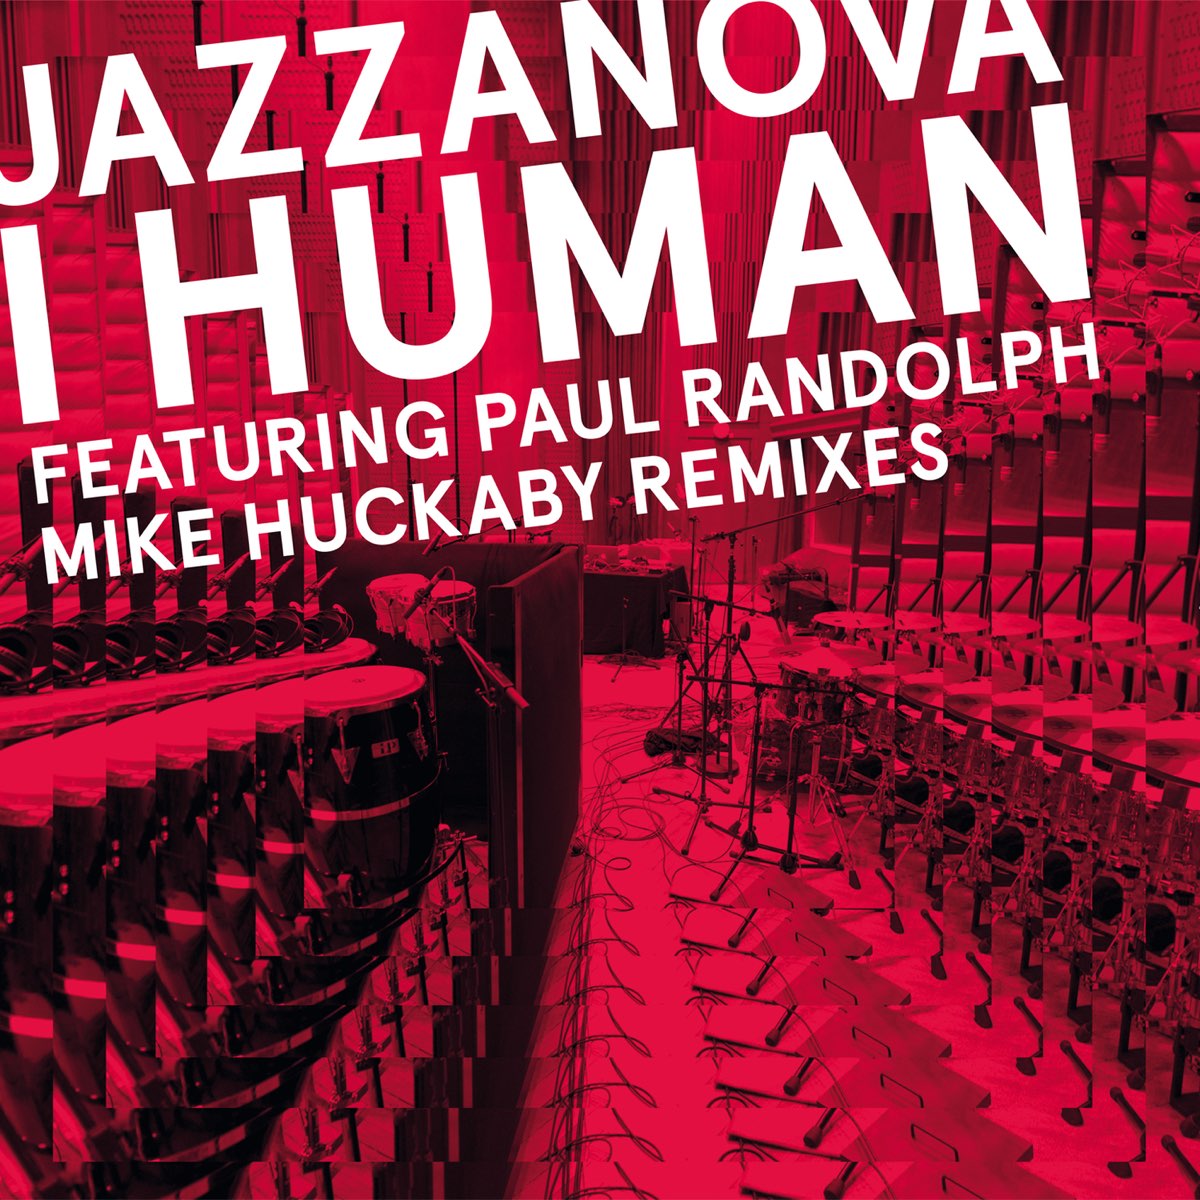 Jazzanova. Paul Randolph. Майк хуман. Jazzanova – Now there is we feat. Paul Randolph (Remixes).